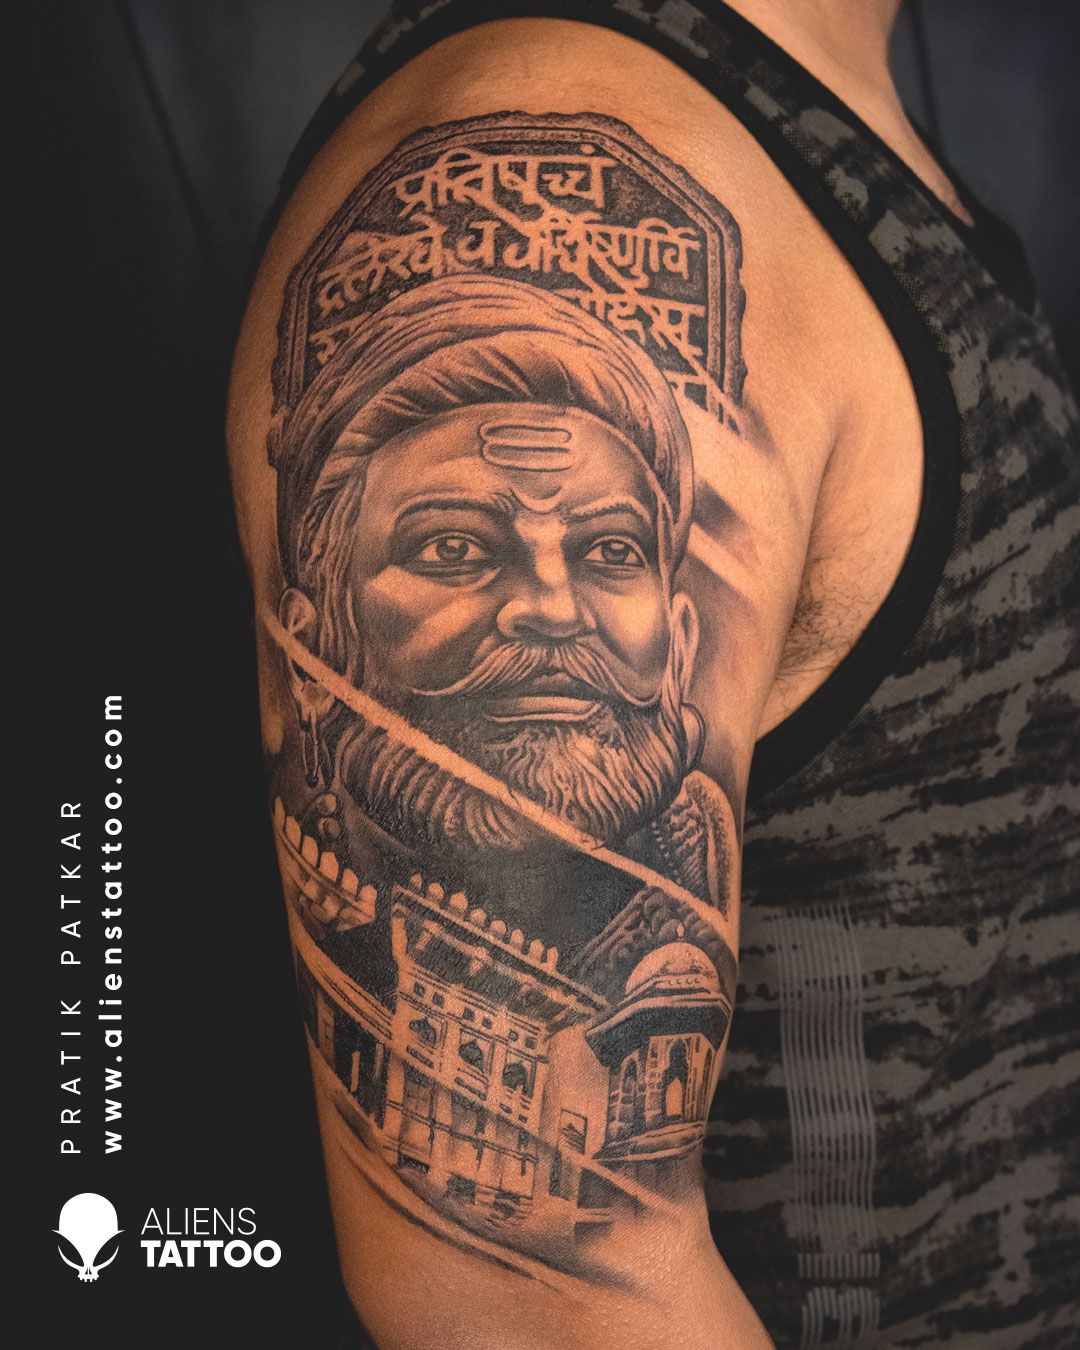 Lillys Fine Tattoo  Chatrapati Shivaji Maharaj Tattoo by deepakvetal5  at lillysfinetattoo chatrapatishivajimaharaj shivajimaharajtattoo  sleeve tattoos tattoo design likeyou  Facebook